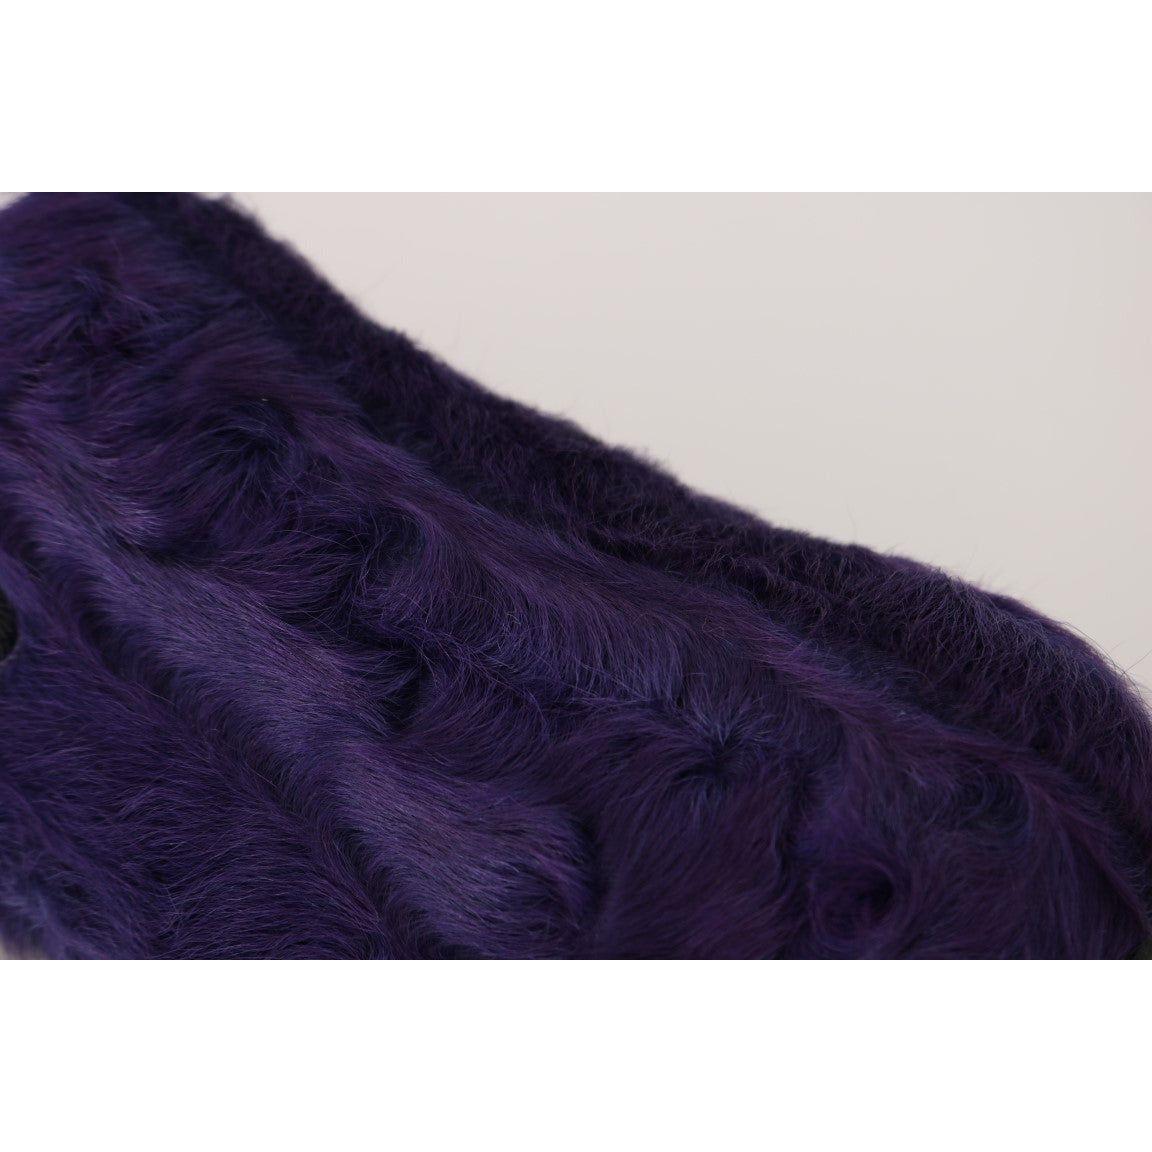 Dolce & Gabbana Plush Purple Sheep Fur Loafers purple-sheep-fur-leather-loafers 466240-purple-sheep-fur-leather-loafers-4.jpg